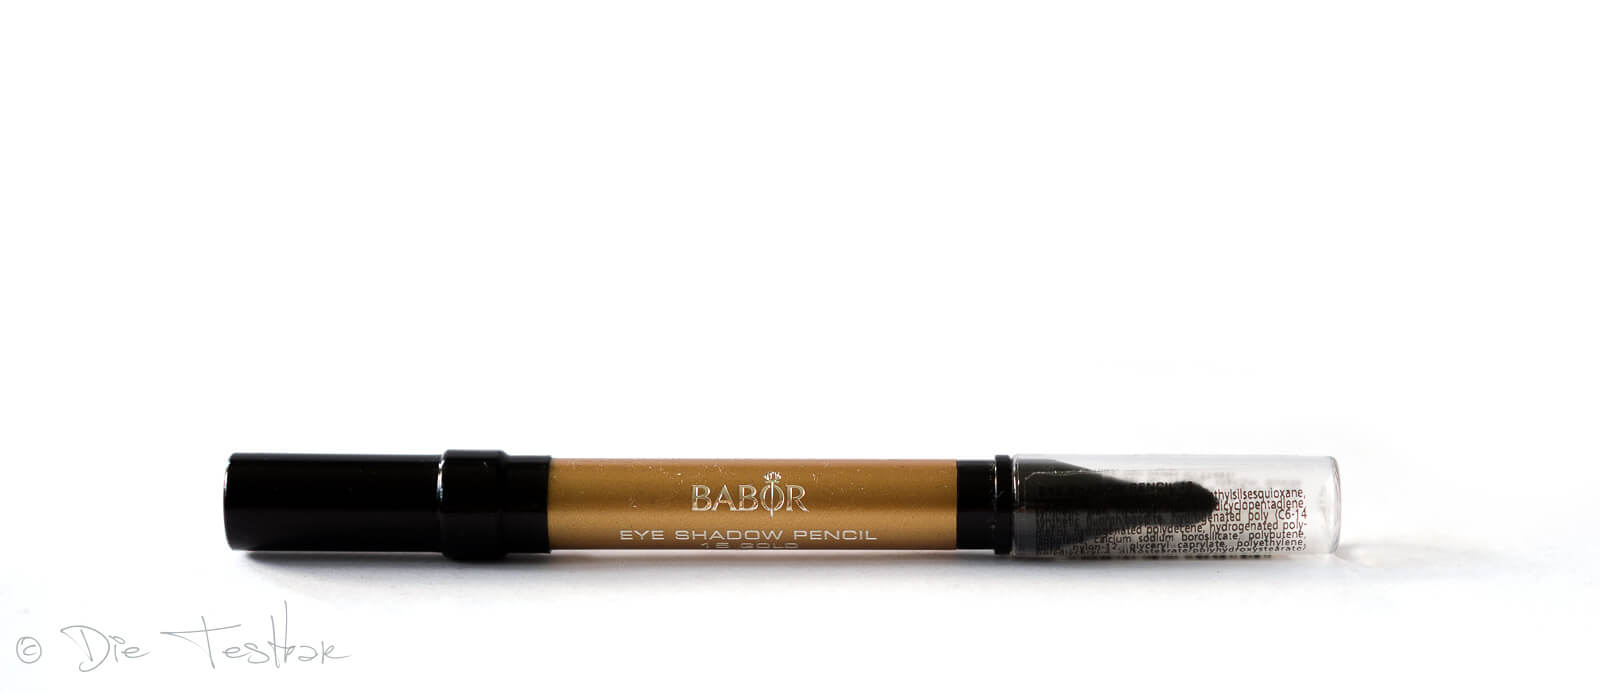 BABOR Eye Shadow Pencil in Gold